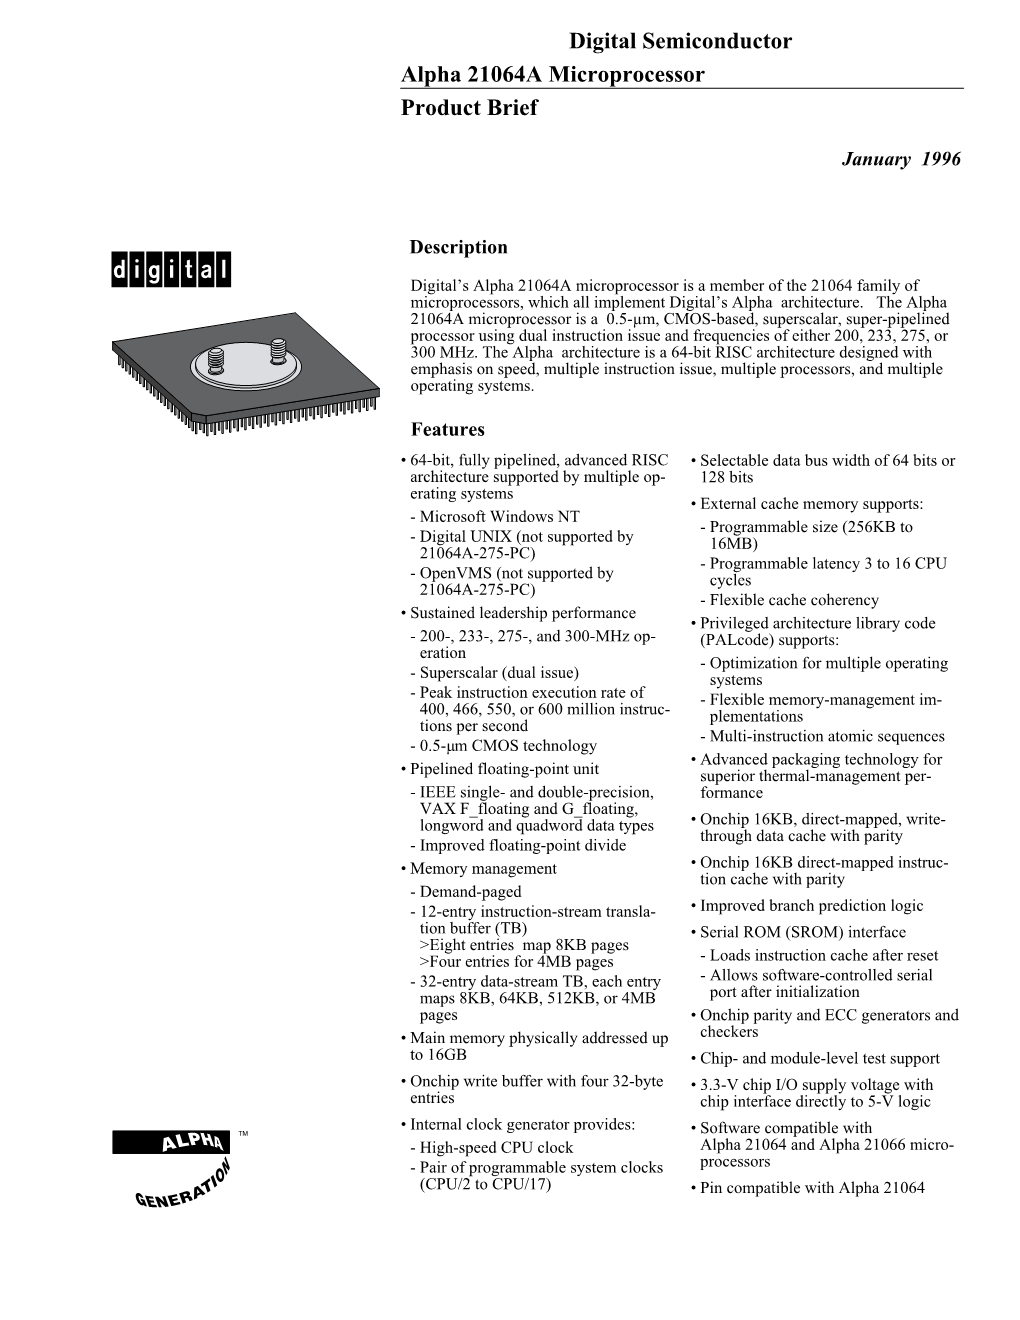 Digital Semiconductor Alpha 21064A Microprocessor Product Brief